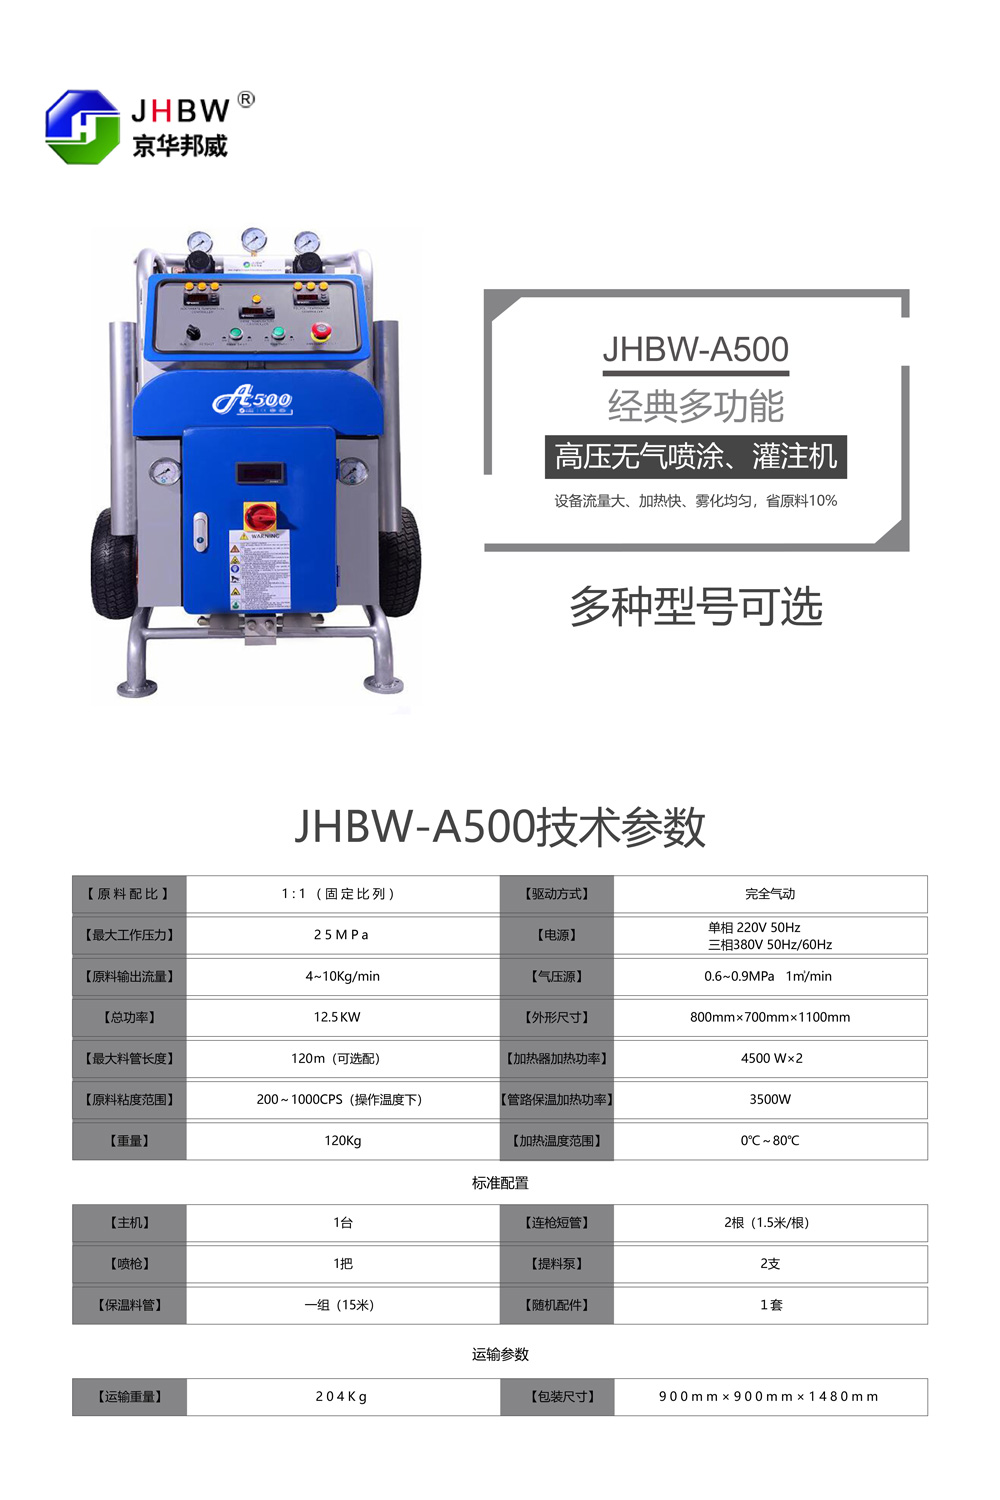 JHBW-A500聚氨酯喷涂机